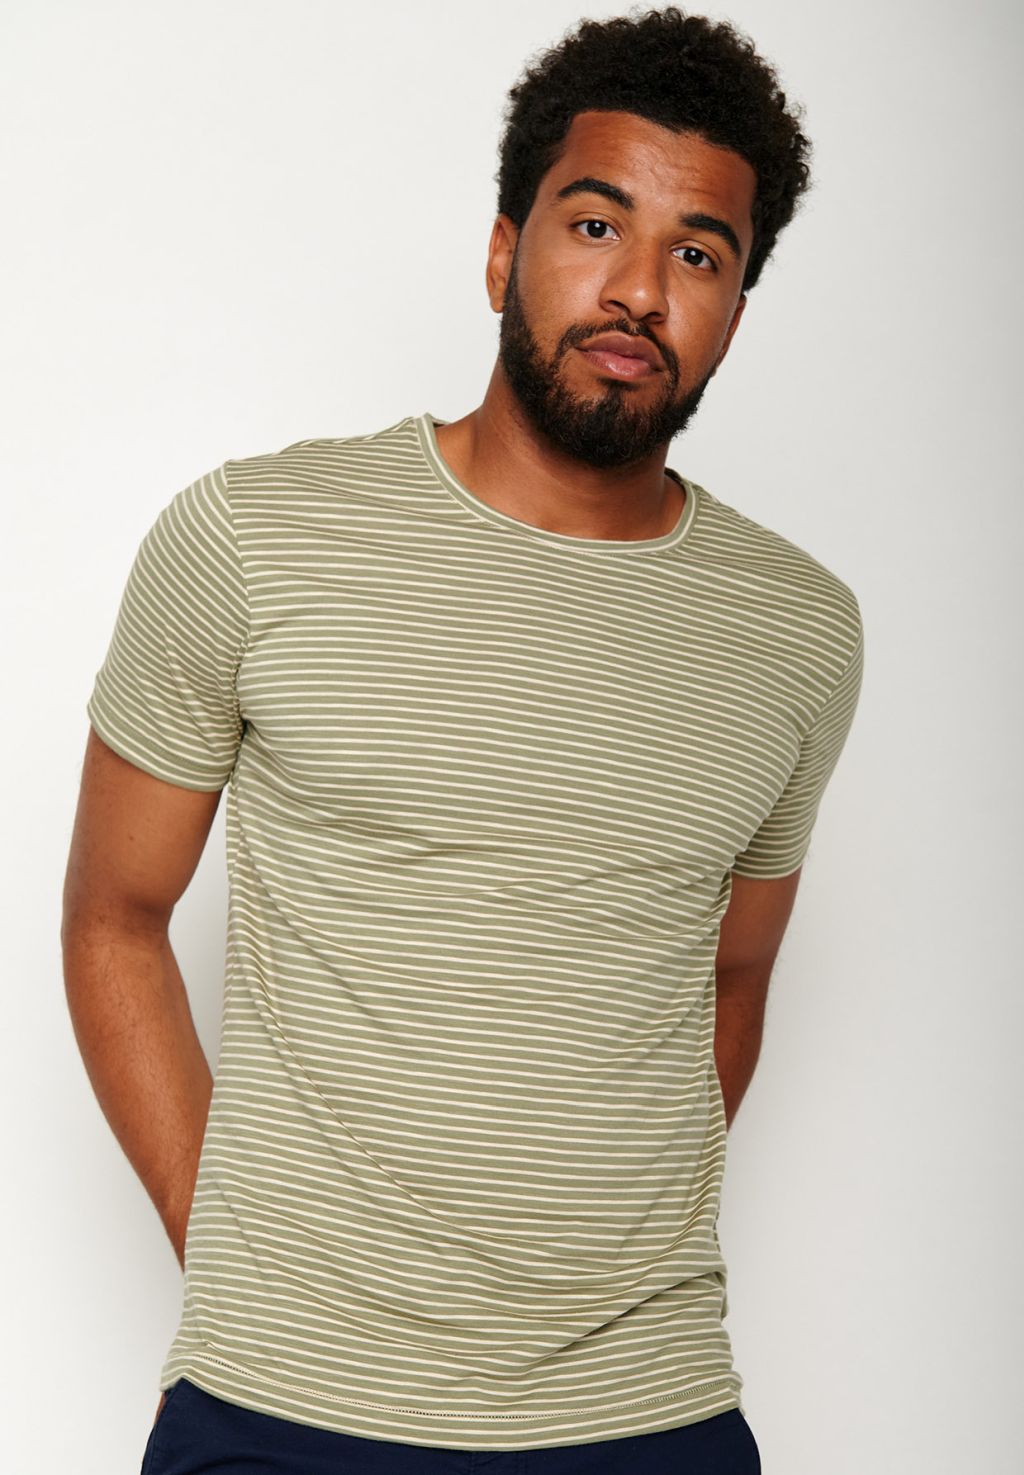 Spice Striped Shirt Gots Sea Green M